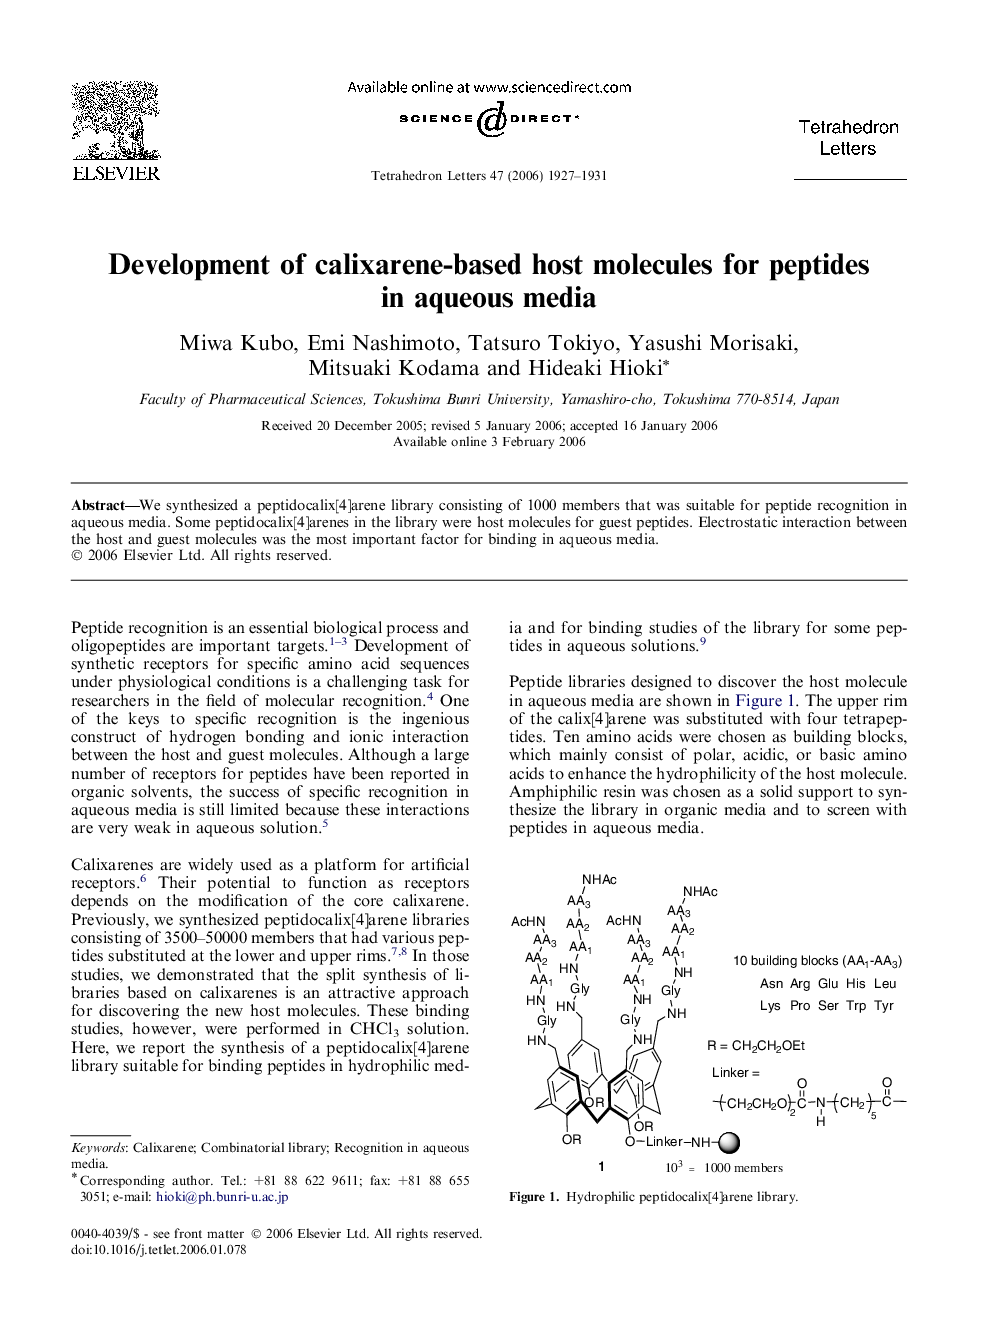 Development of calixarene-based host molecules for peptides in aqueous media